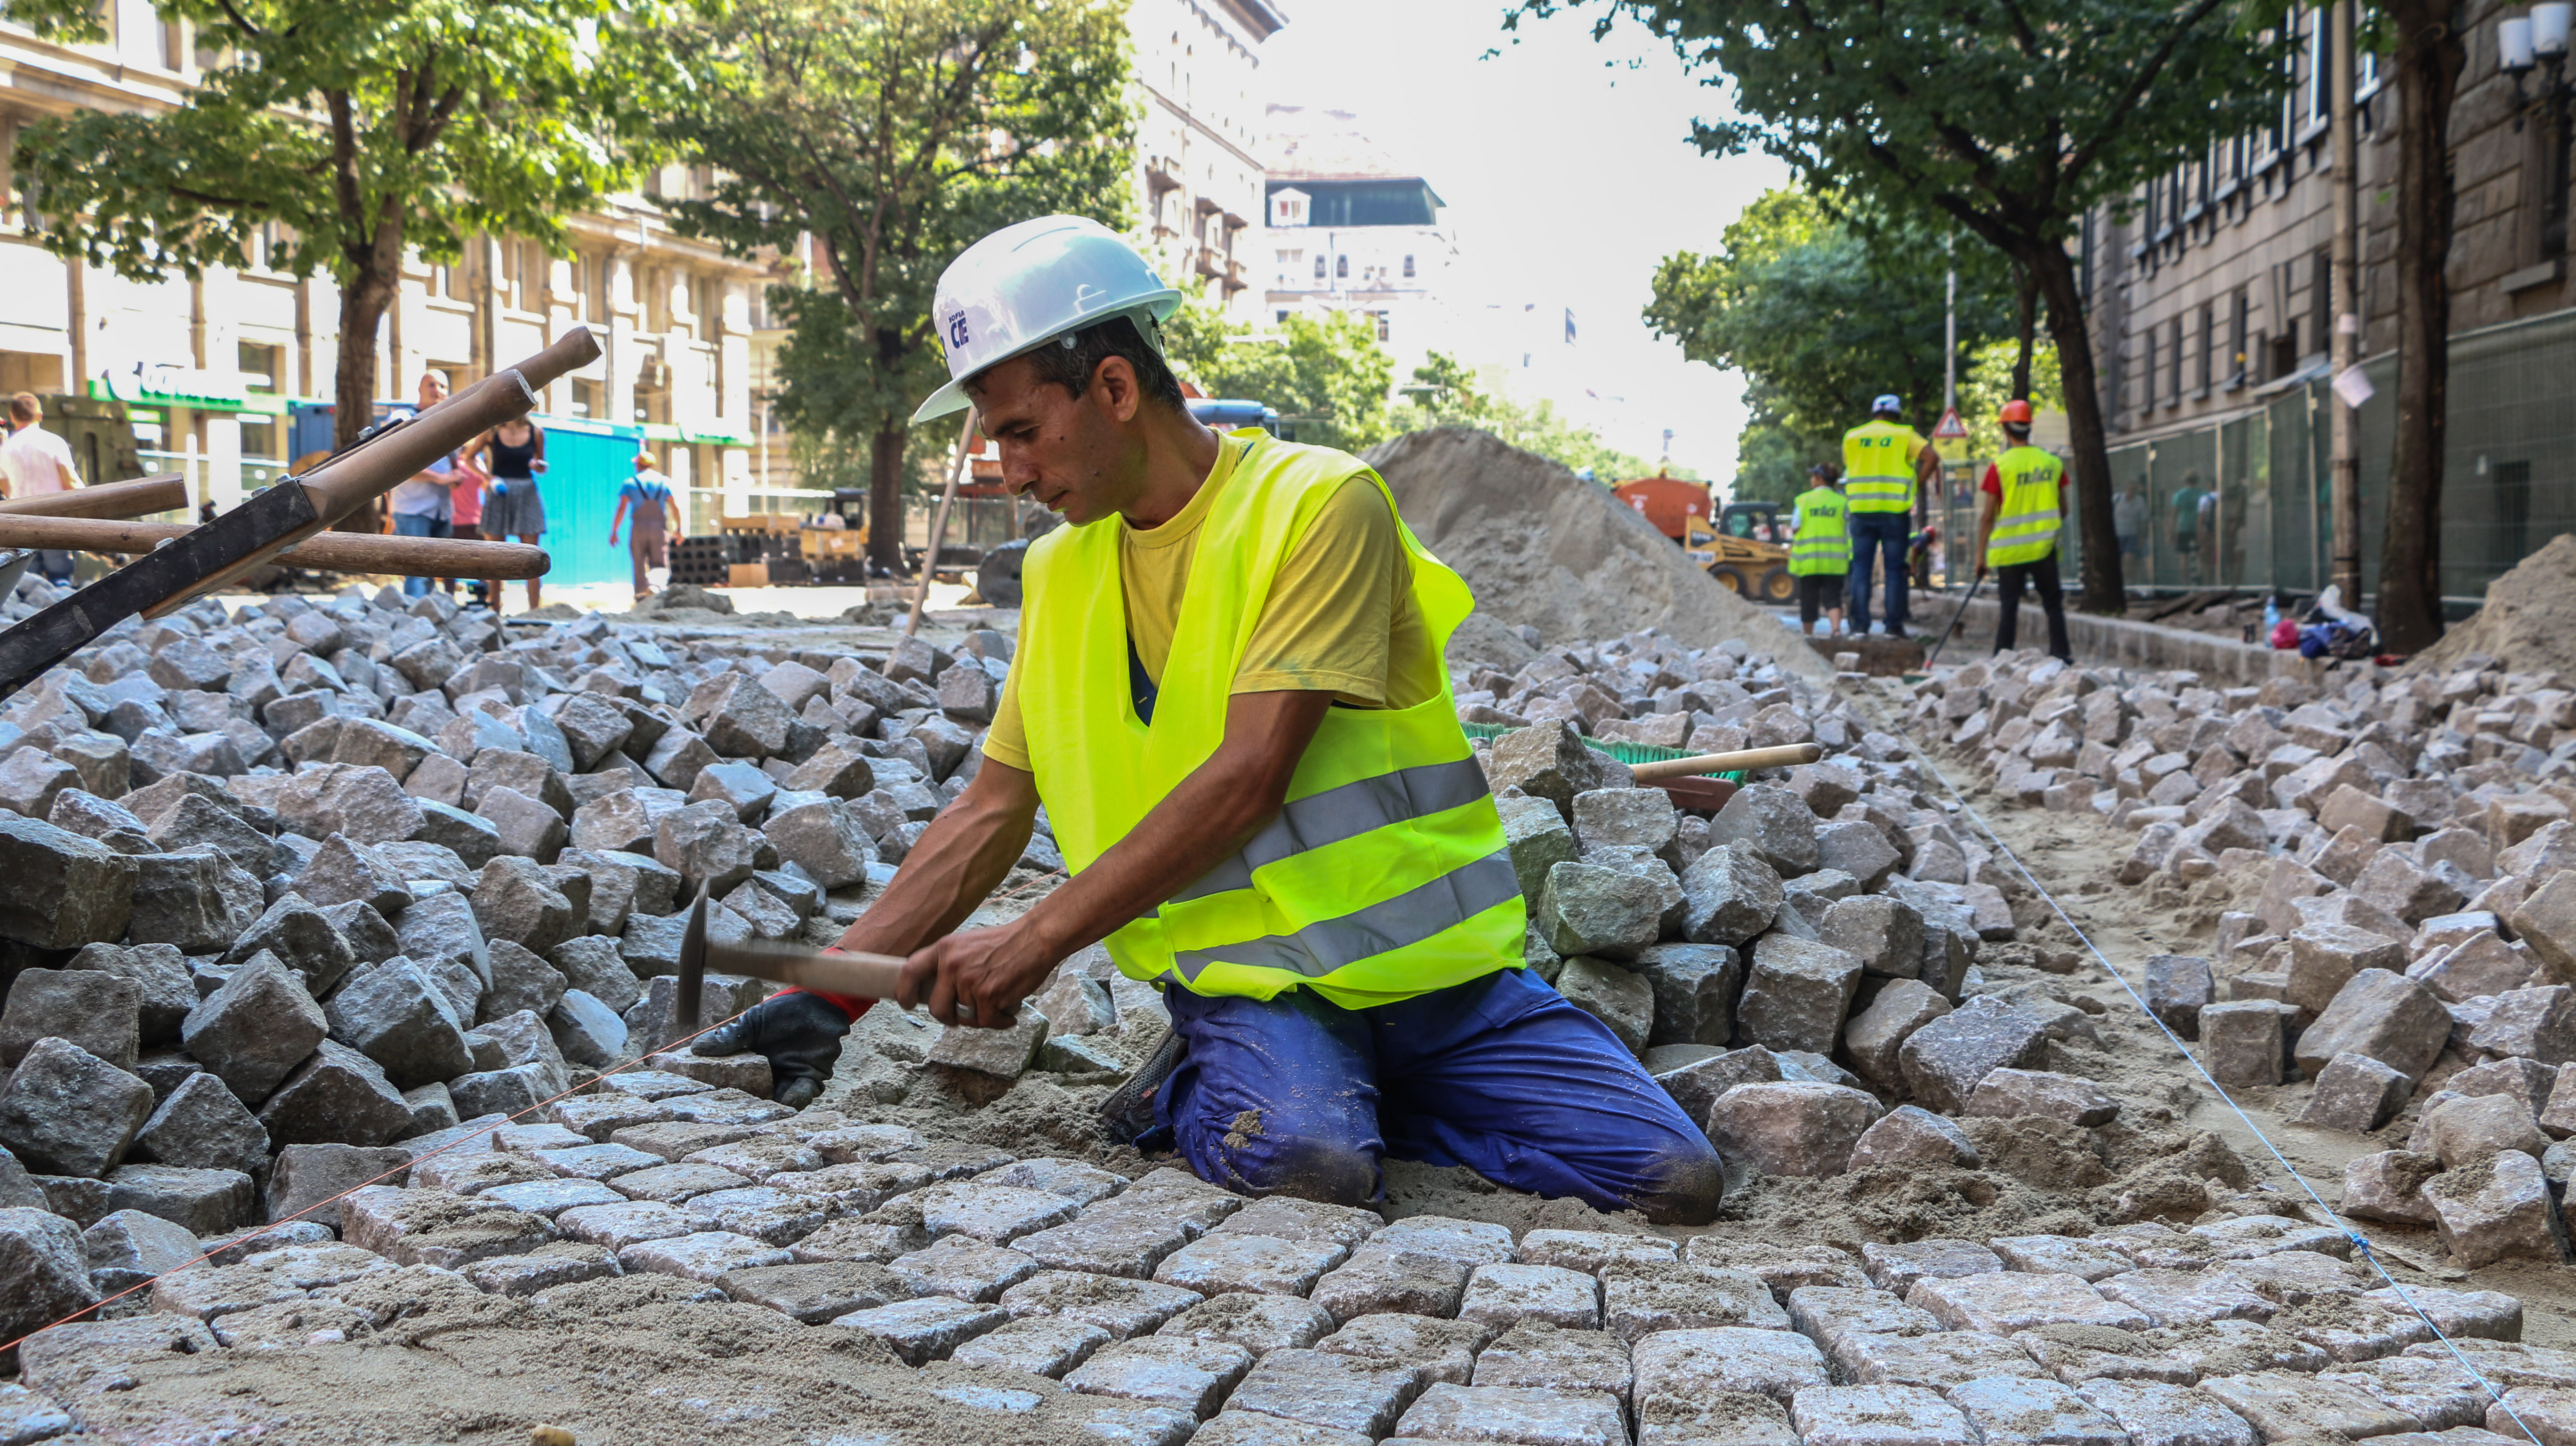 Пренареждането на паветата на бул. ”Дондокув” предизвика доста критики по време на ремонта